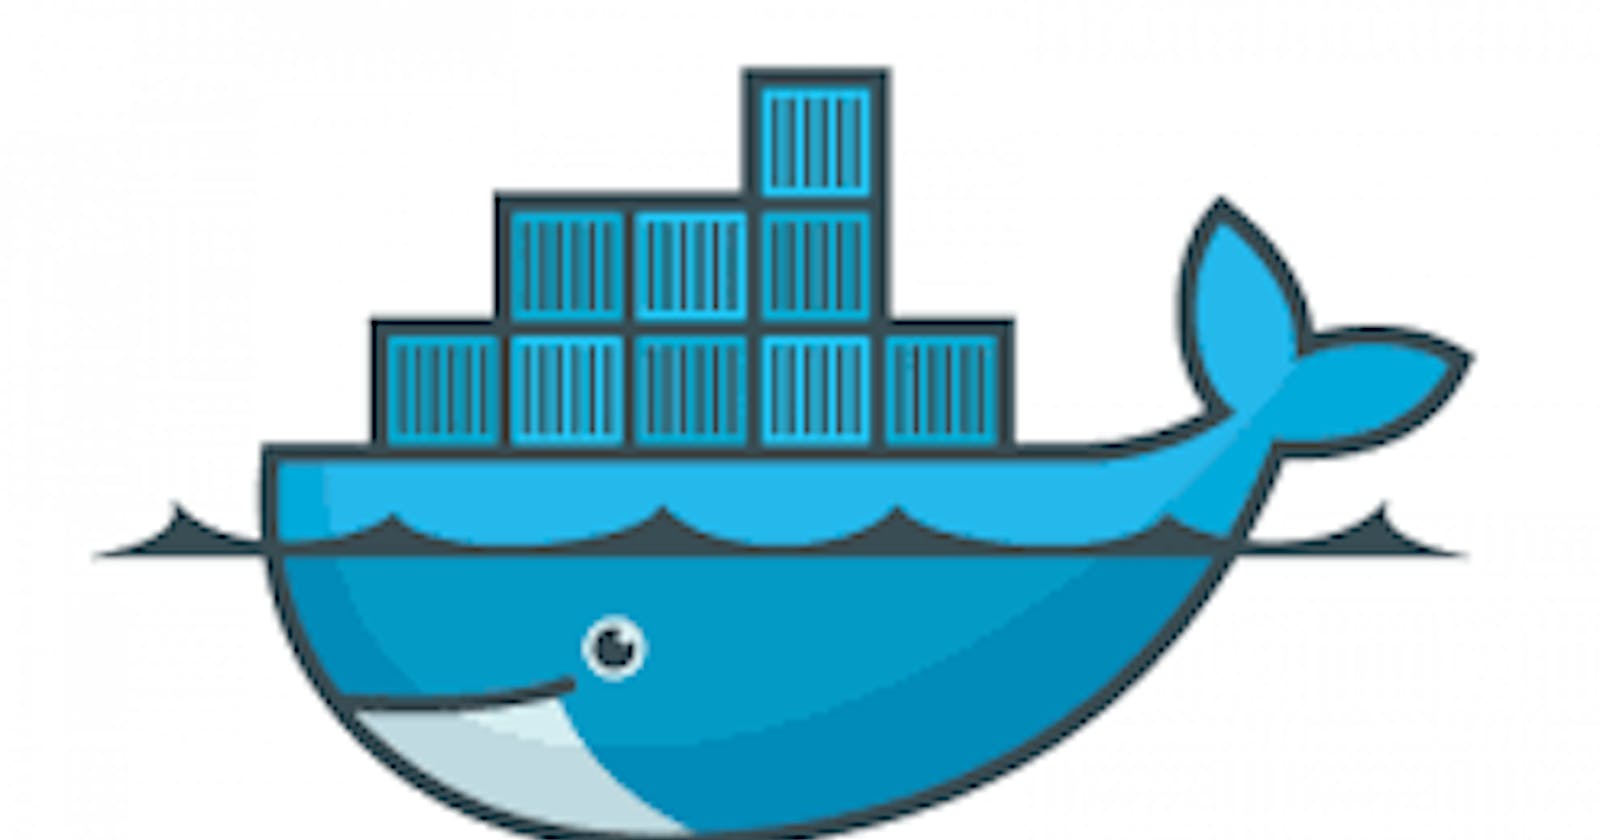 GUI App in CentOS Docker Container